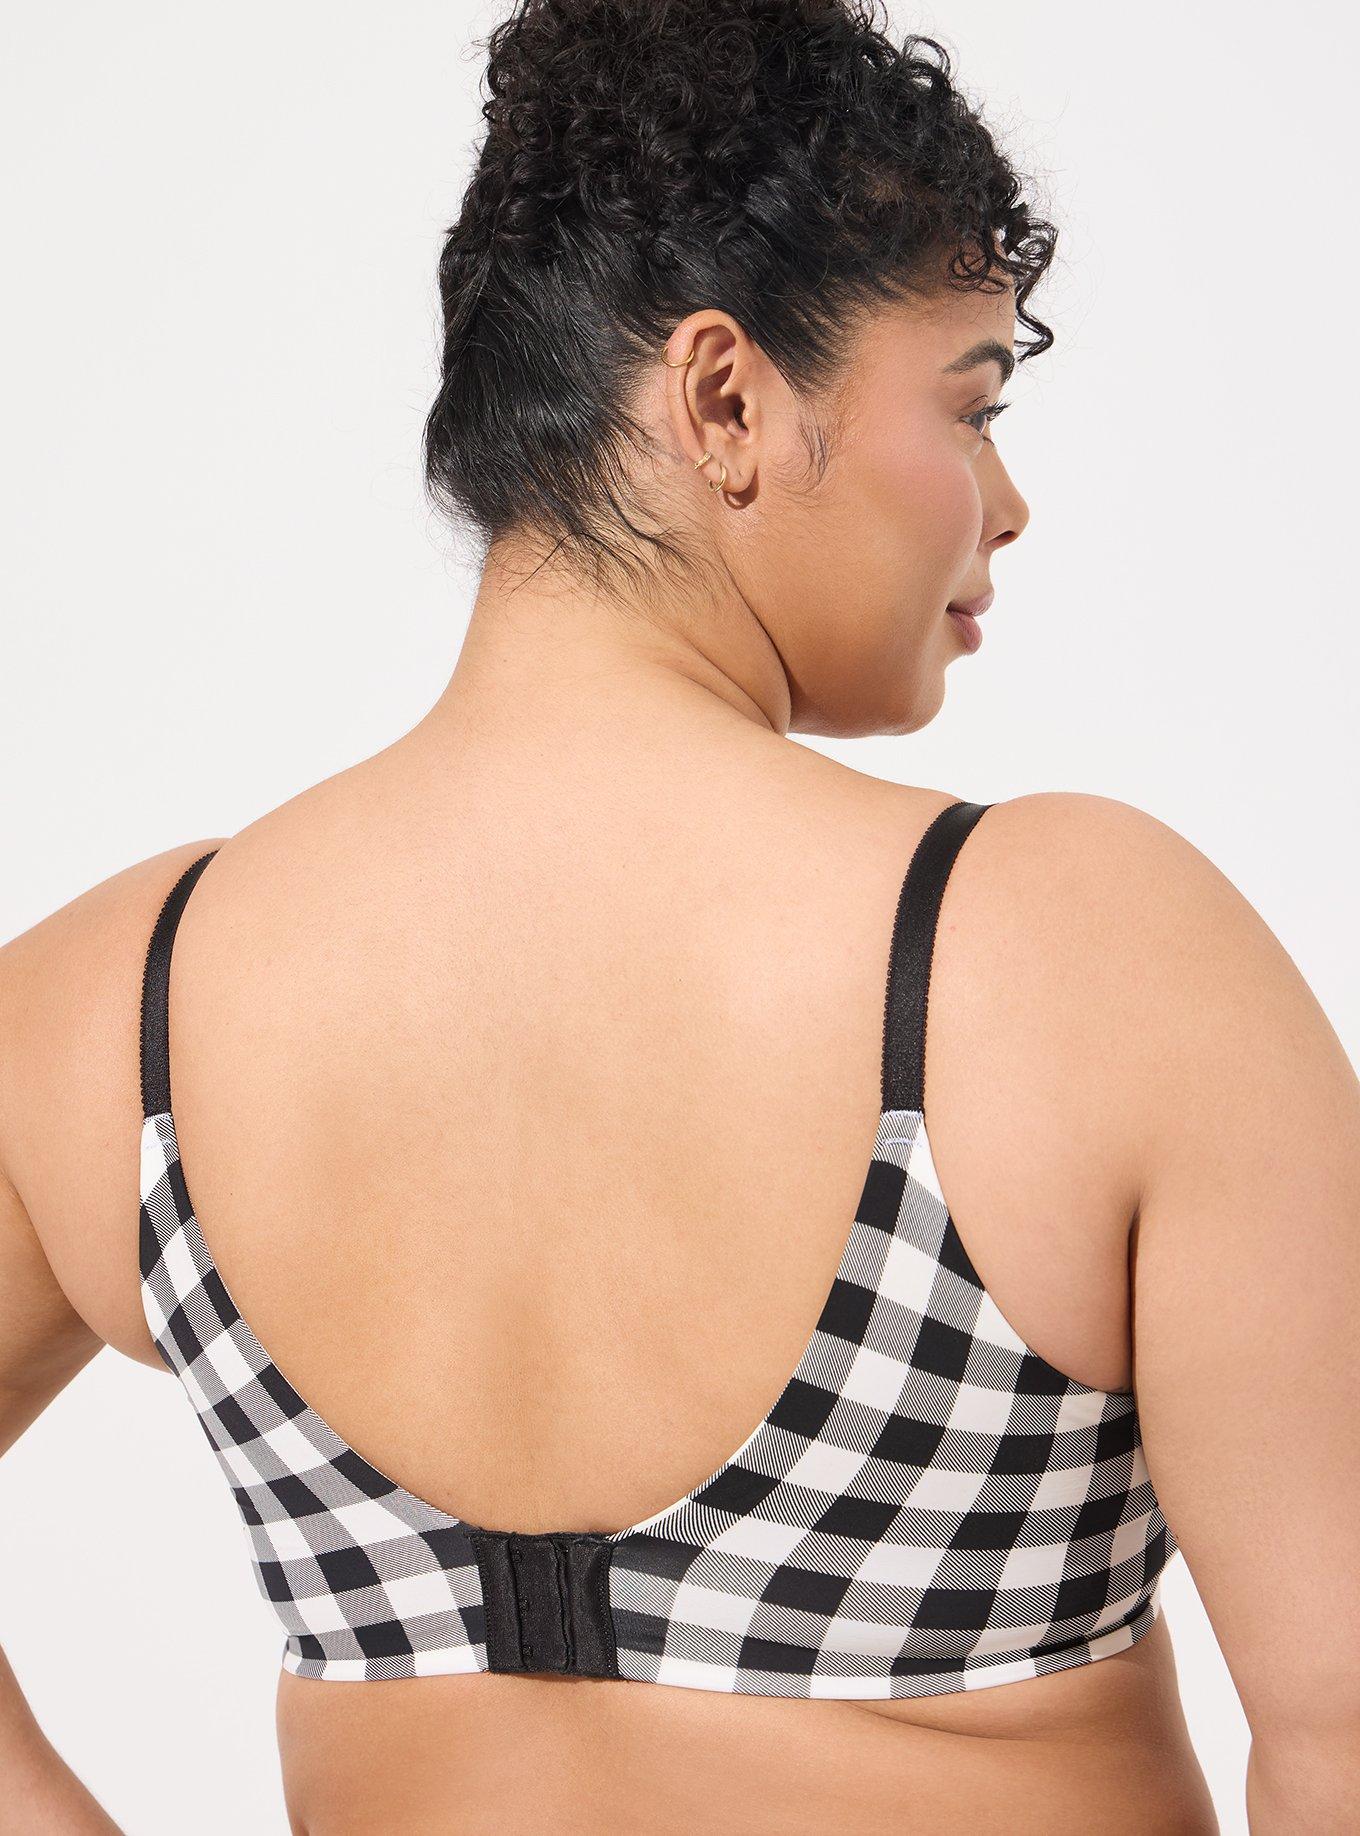 Cacique Women's Full Coverage Bra Size 44D - Black/Gray/White Leopard Print